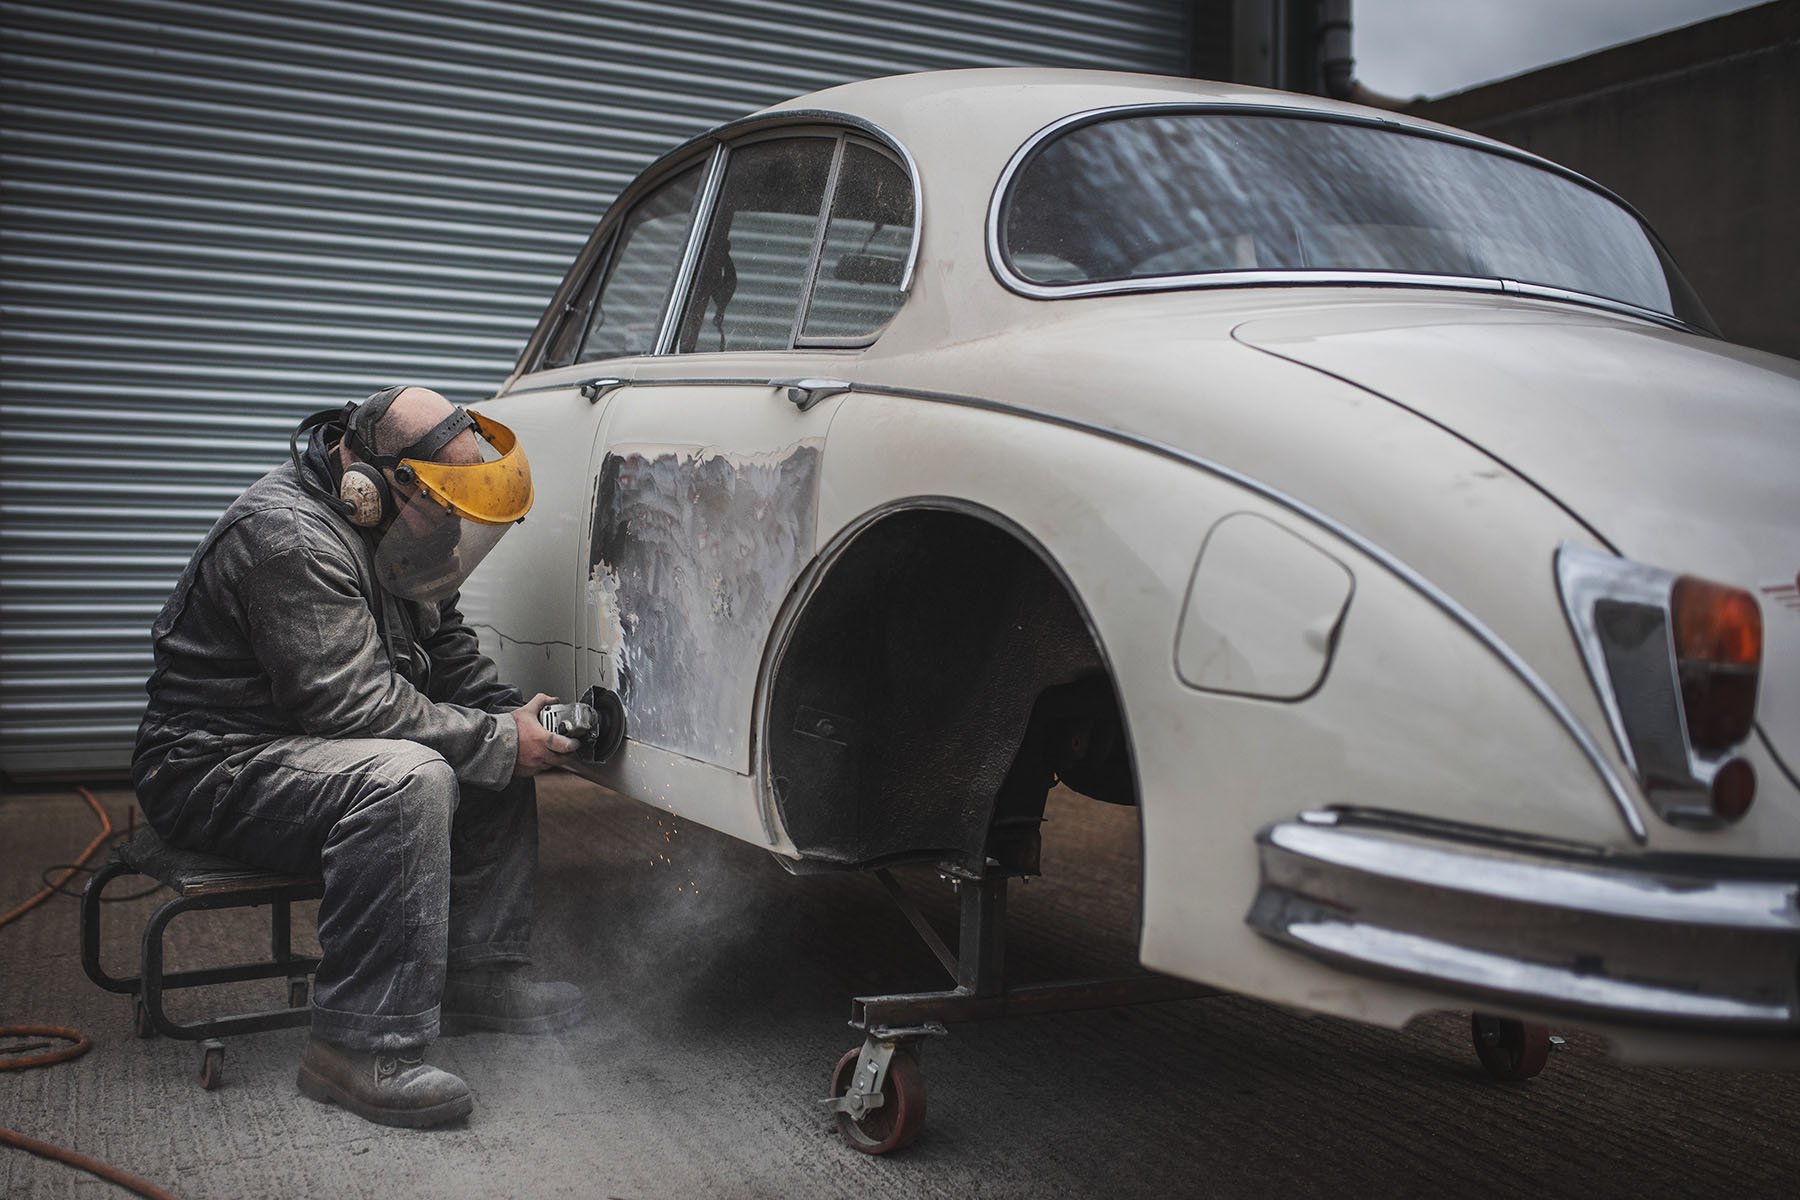 Auto Body Mechanics: Restoring Cars to Their Former Glory